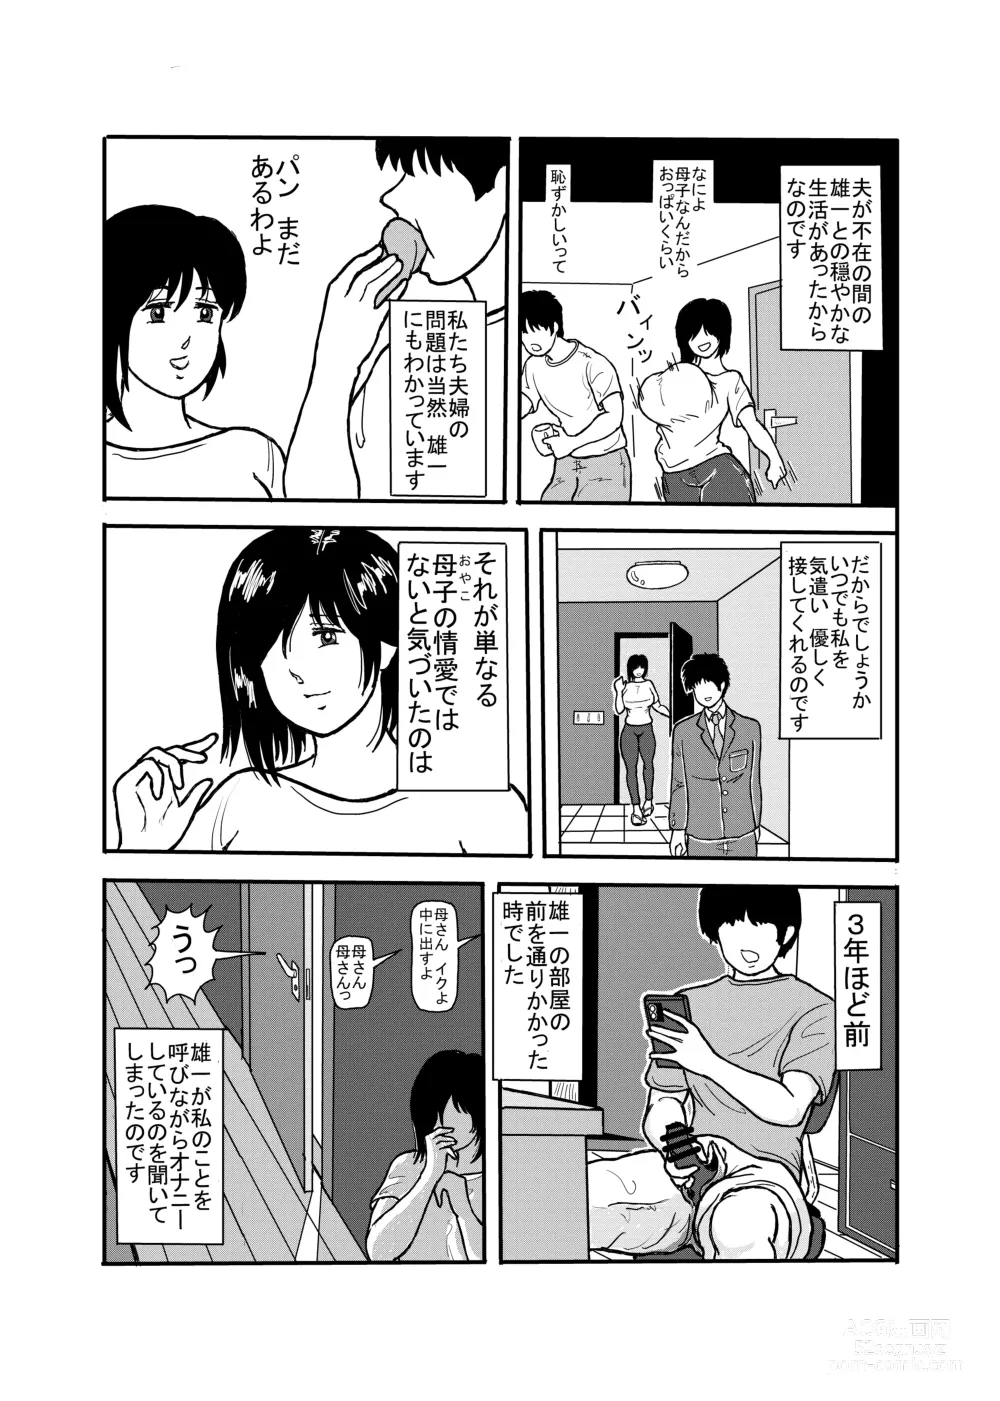 Page 7 of doujinshi 息子と二人きりで暮らすことになりました―初めての膣内射精―